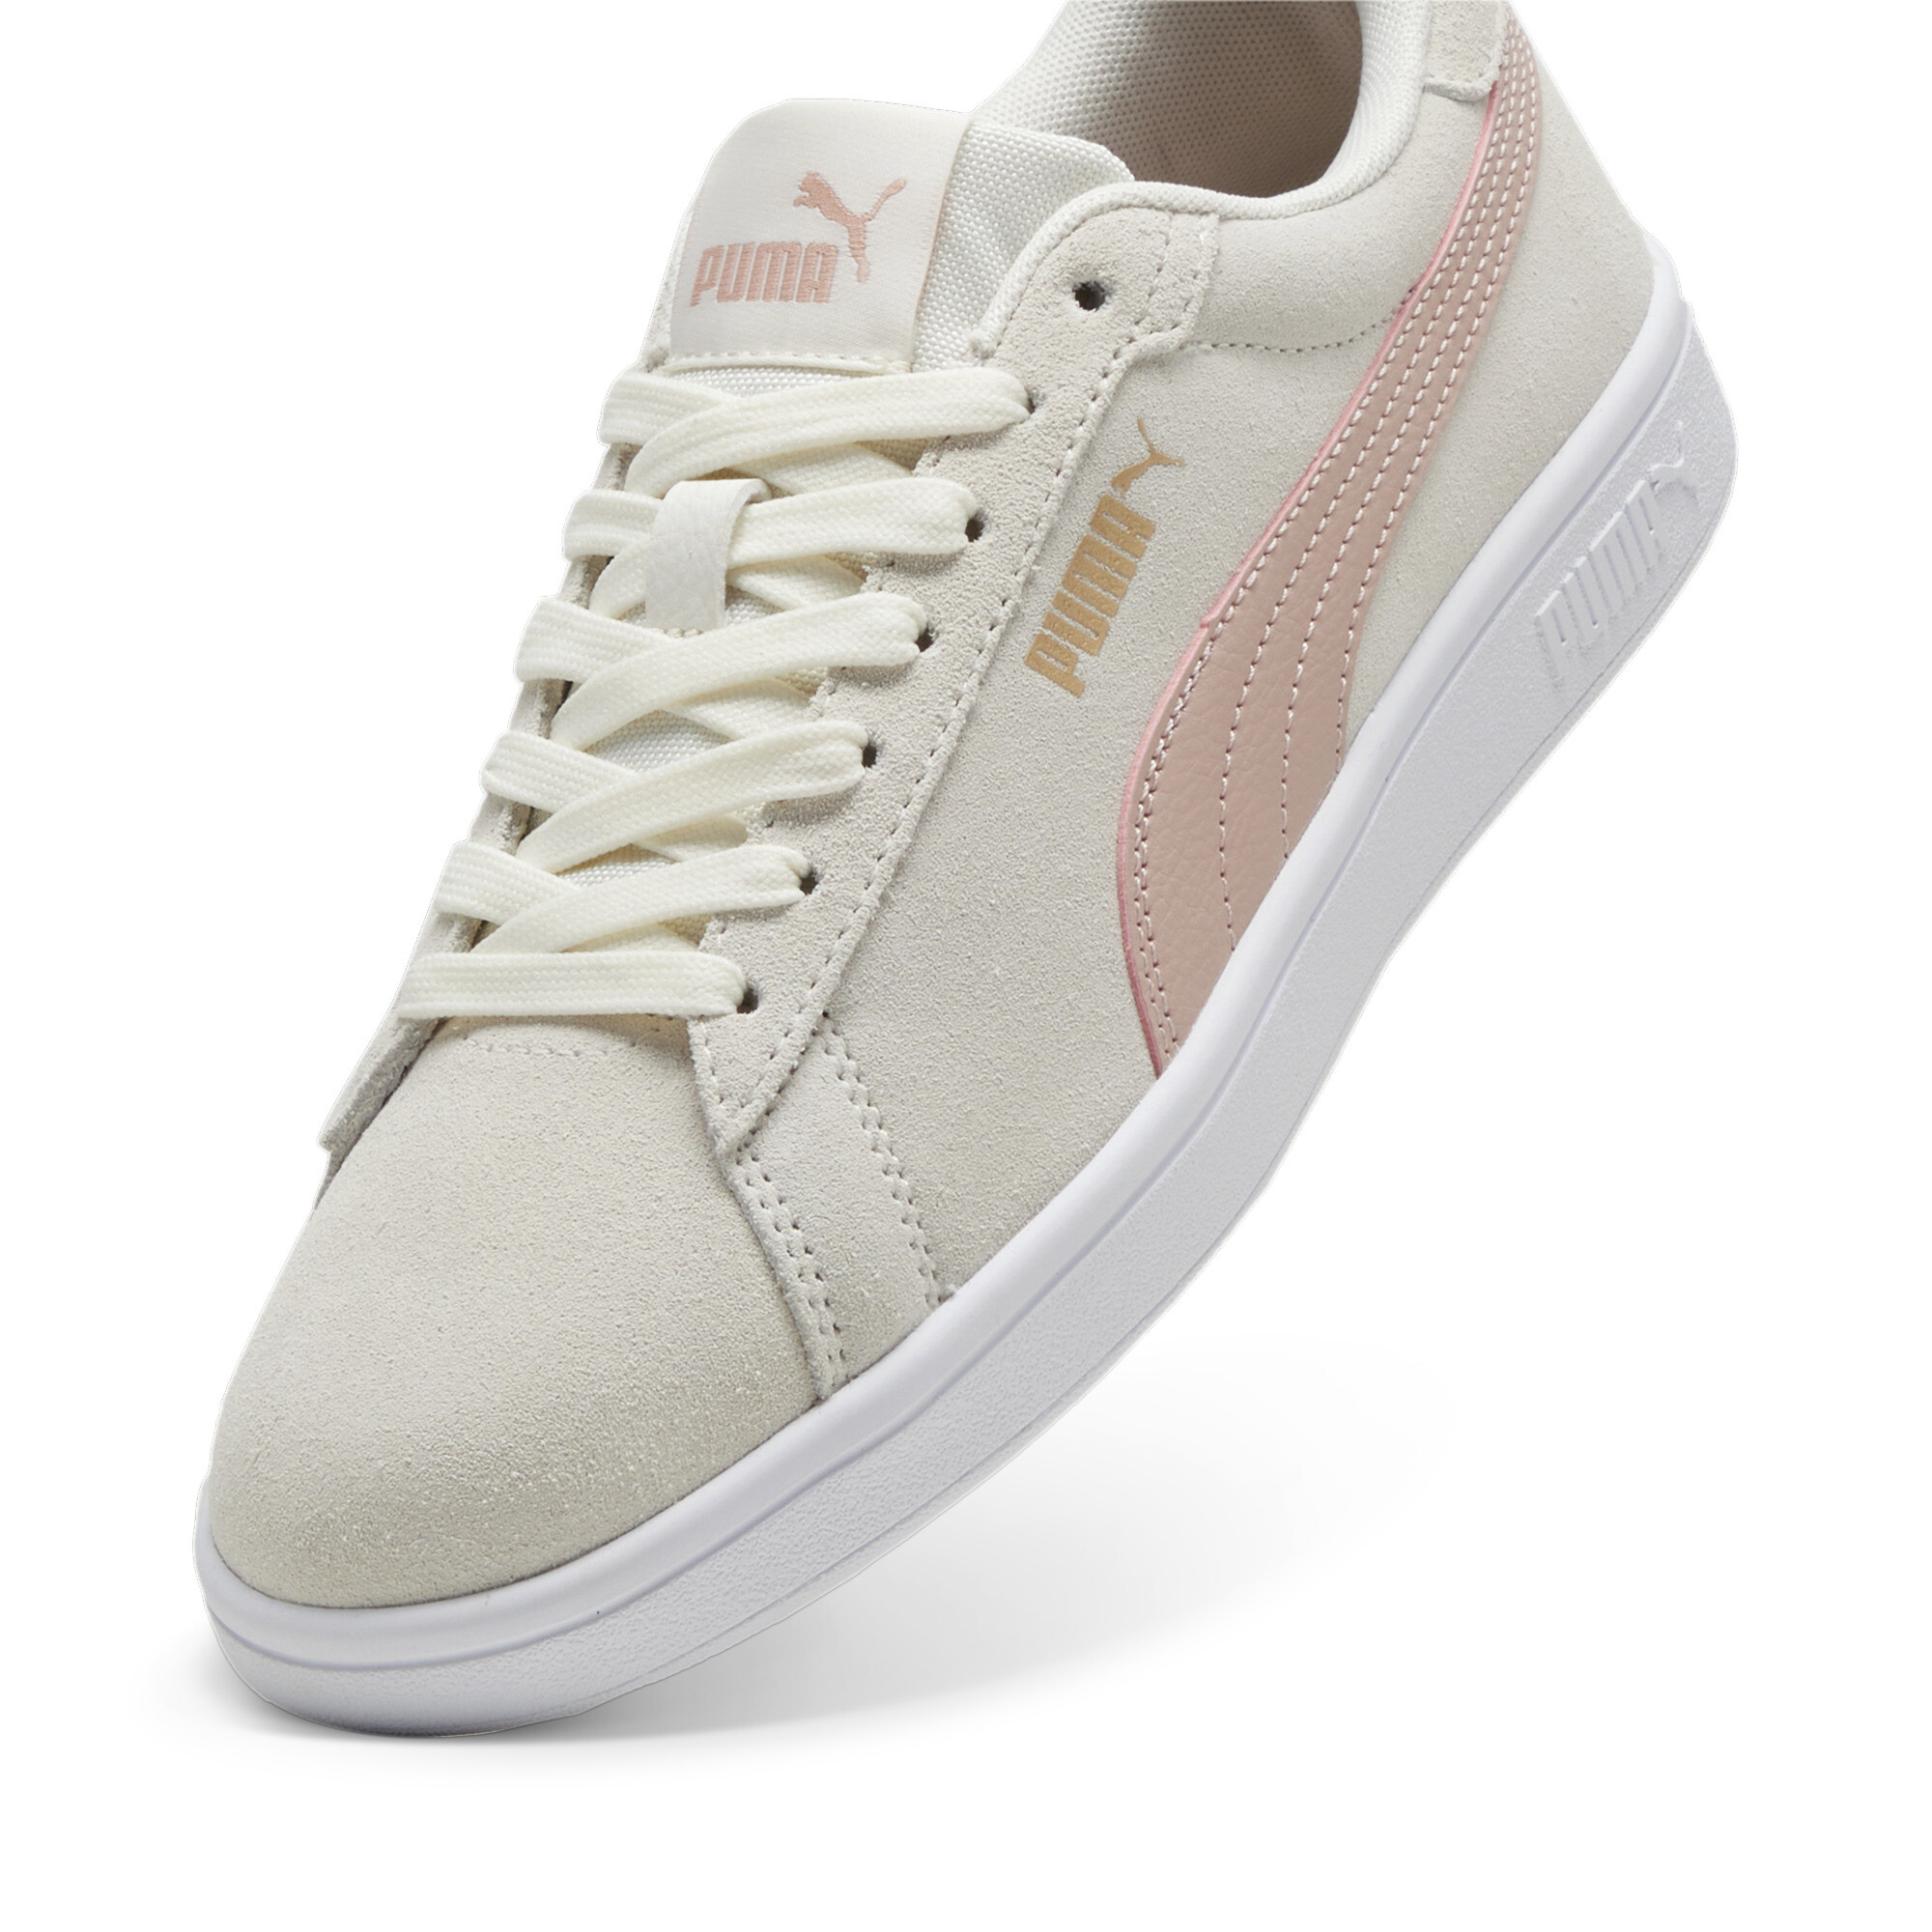 Puma Smash 3.0 Sneakers, White, Size 48, Shoes